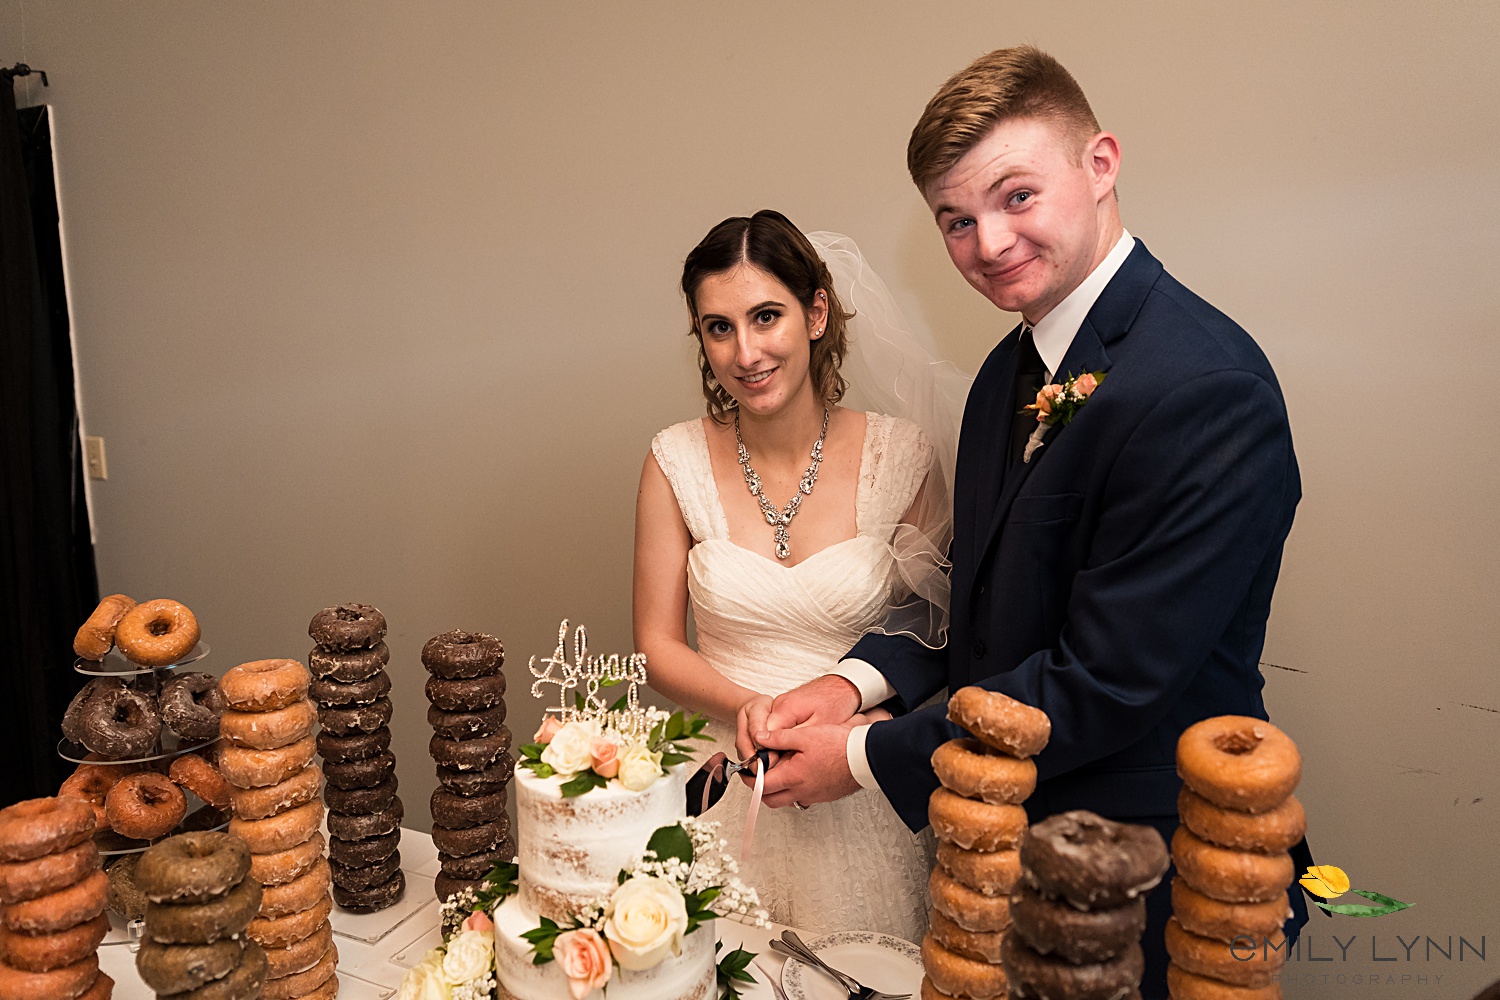 Cake cutting photo. Wedding-Photos-at-Enchanted-Acres-KC-Wedding-Photographer-Emily-Lynn-Photography.